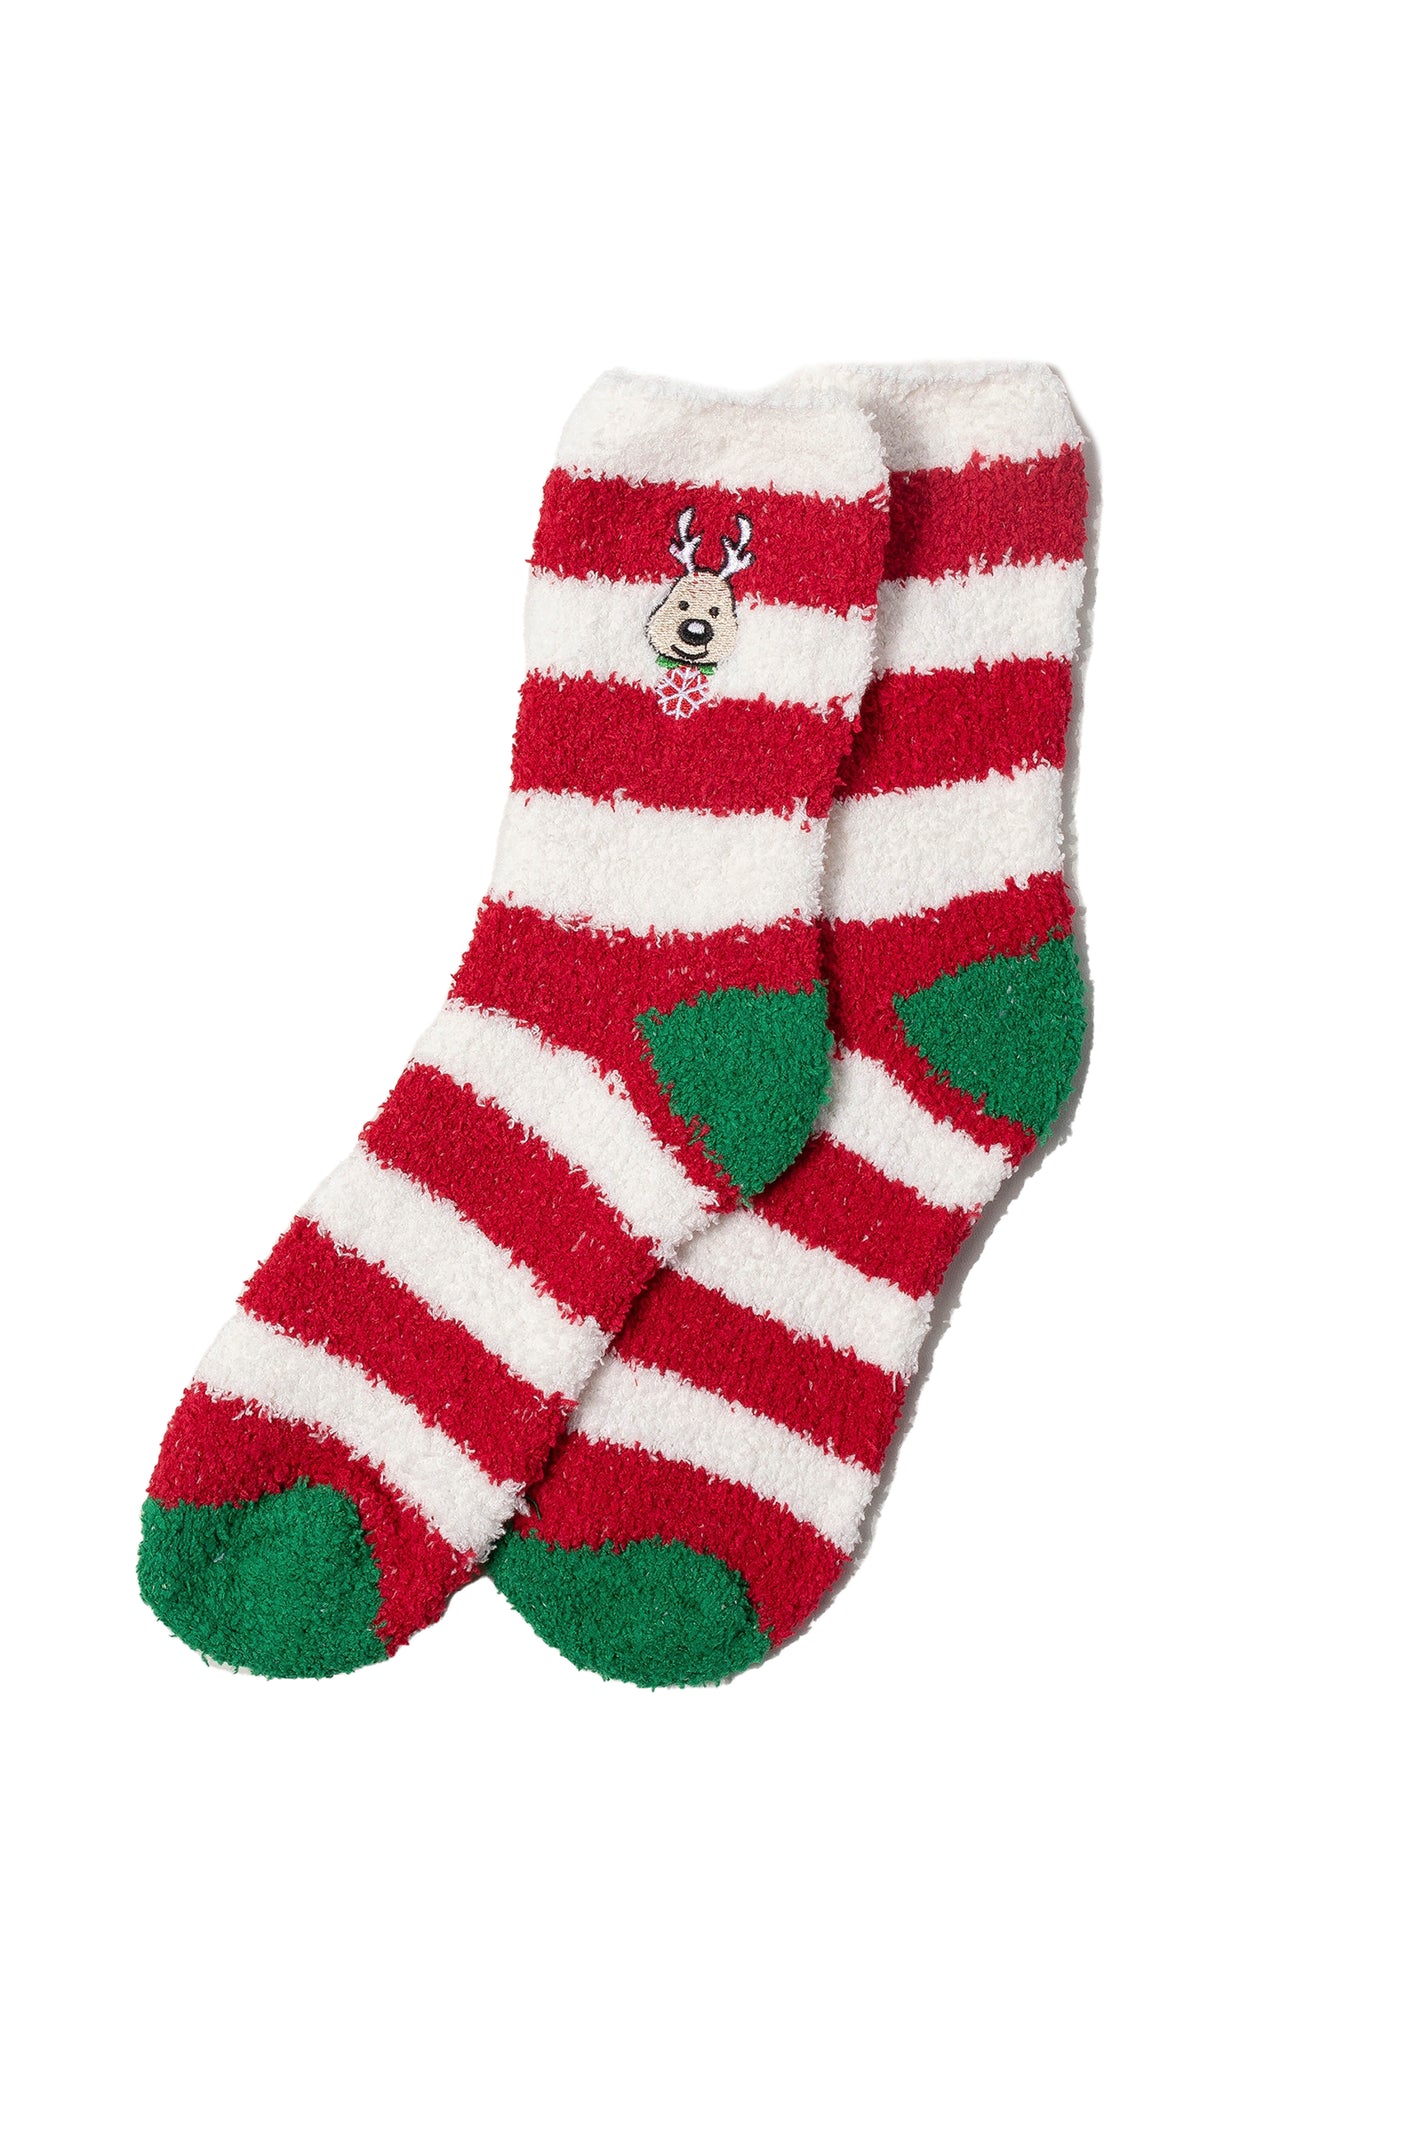 5415  -Assorted Christmas Sleep Socks (Multi Color) - FINAL SALE